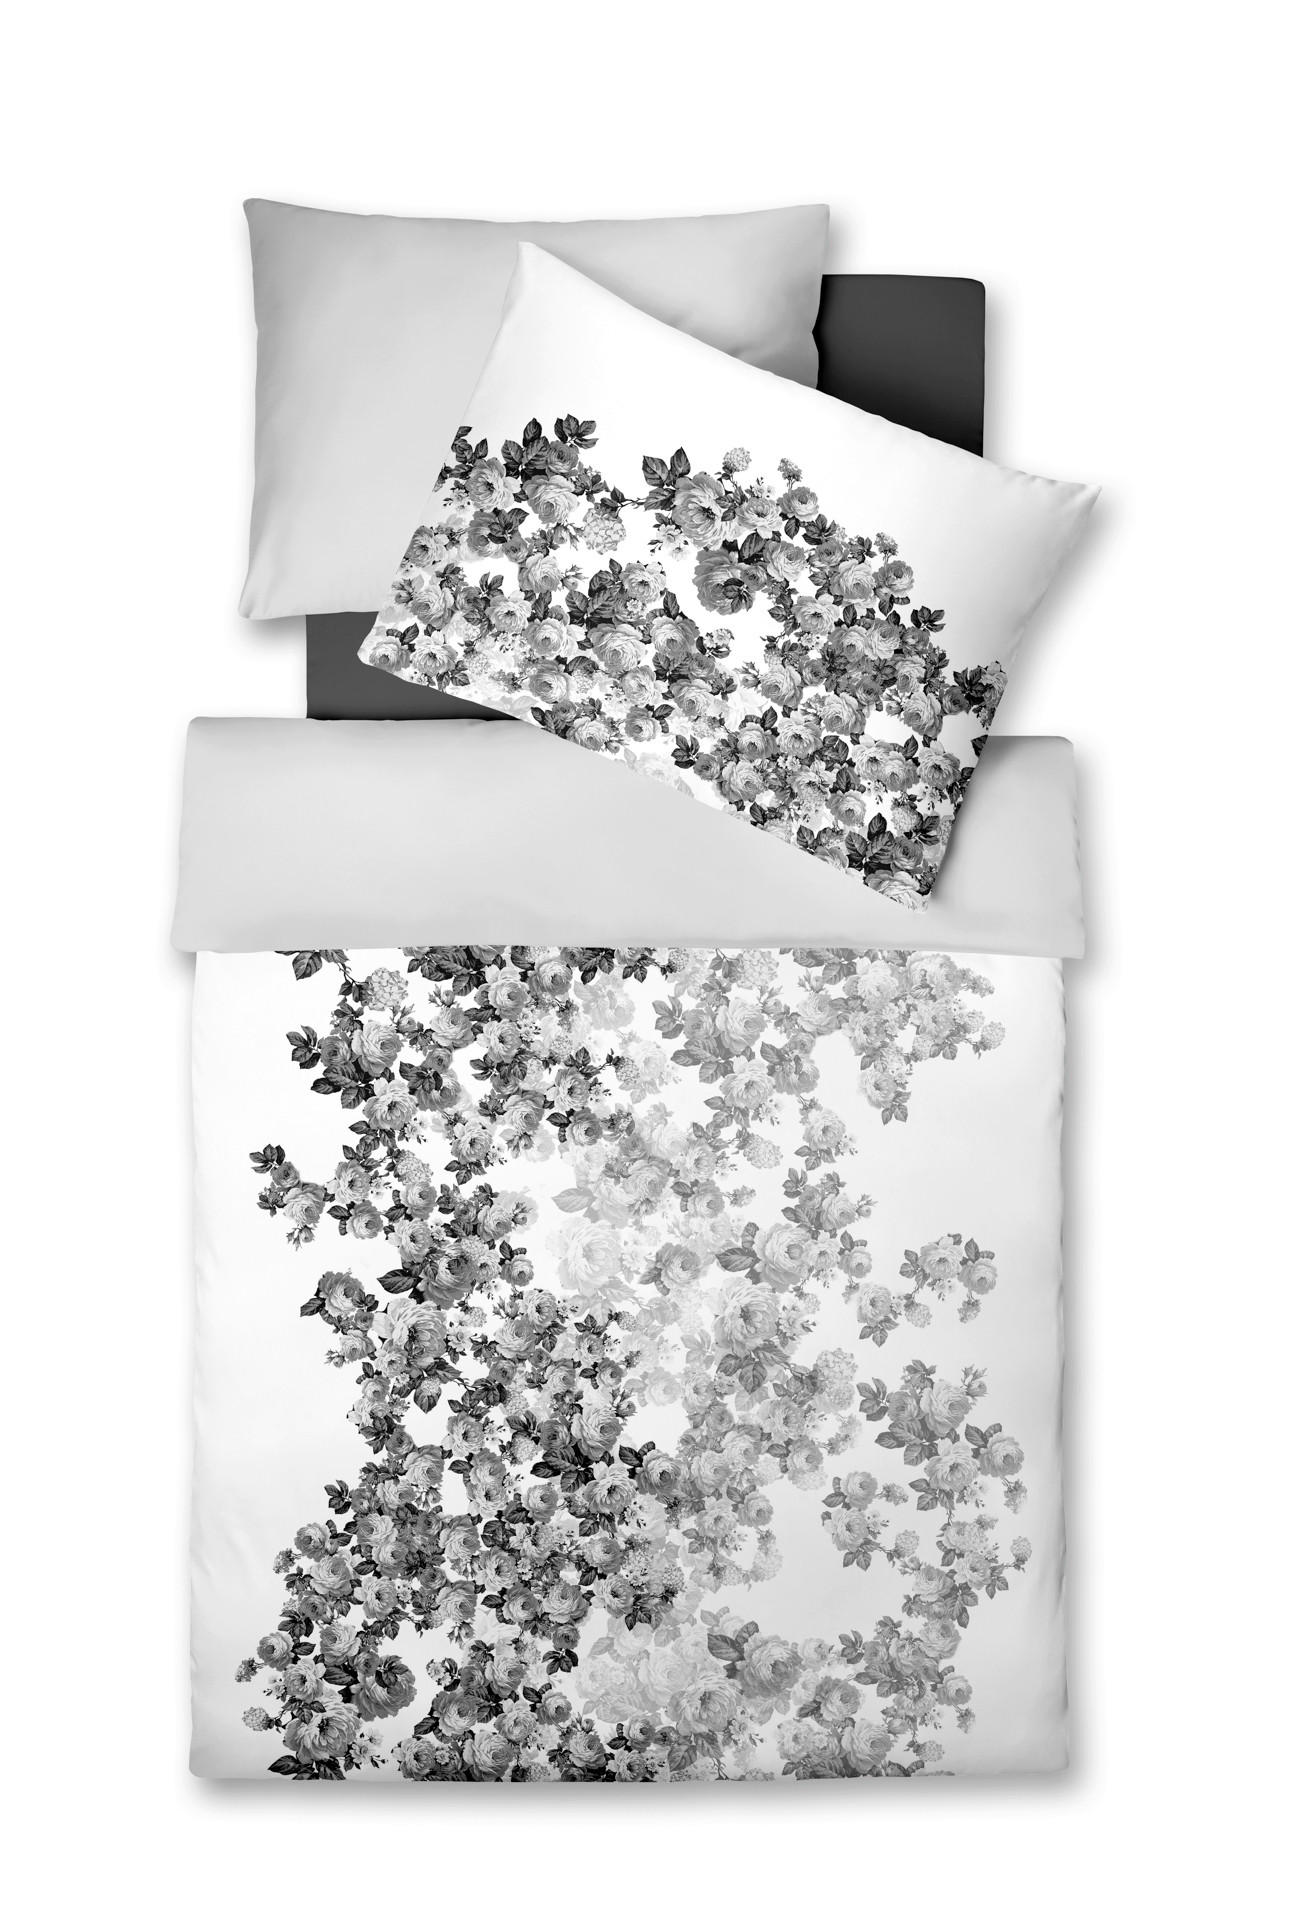 Fleuresse POVLEČENÍ, makosatén, černá, bílá, 140/200 cm - černá,bílá